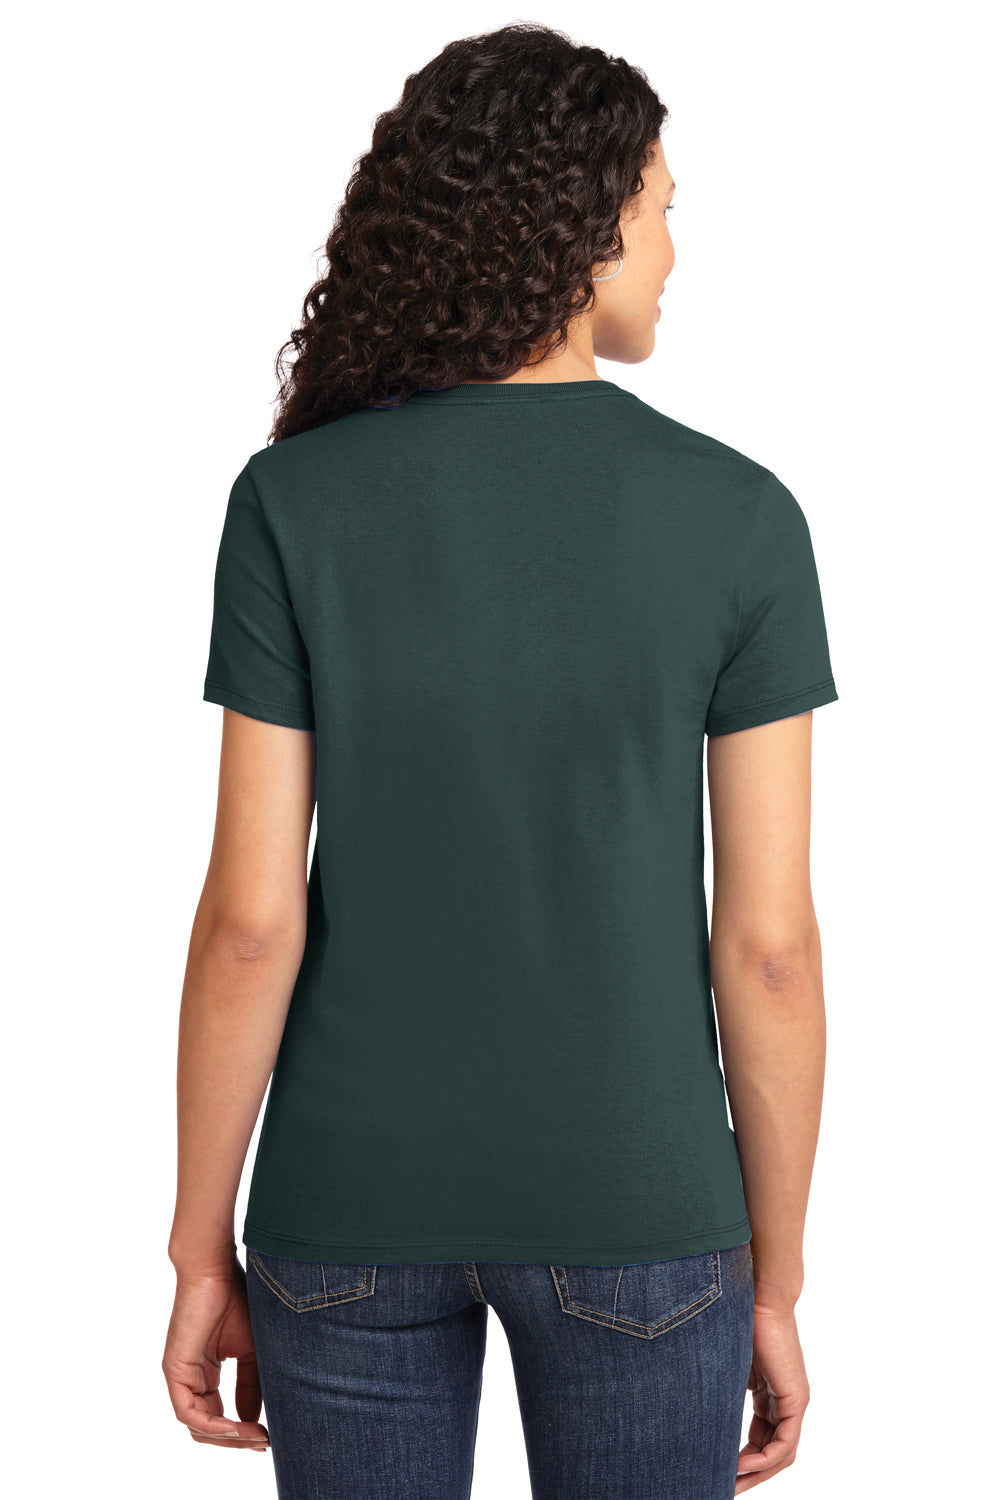 Port & Company LPC61 Womens Essential Short Sleeve Crewneck T-Shirt Dark Green Back